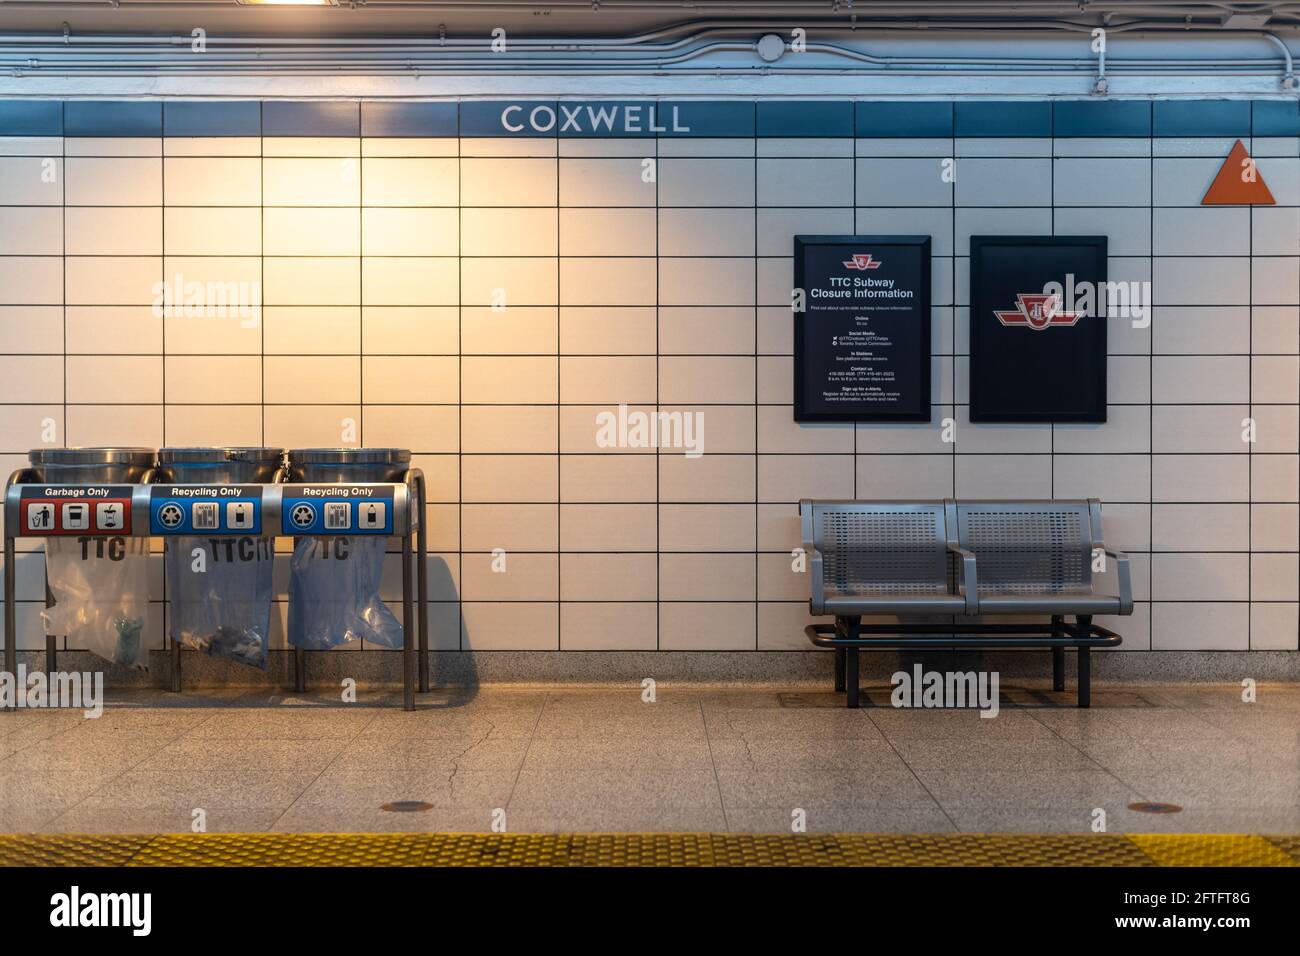 Coxwell subway station platform in Line 2 of the Toronto Transit Commission public transportation system, Canada Stock Photo